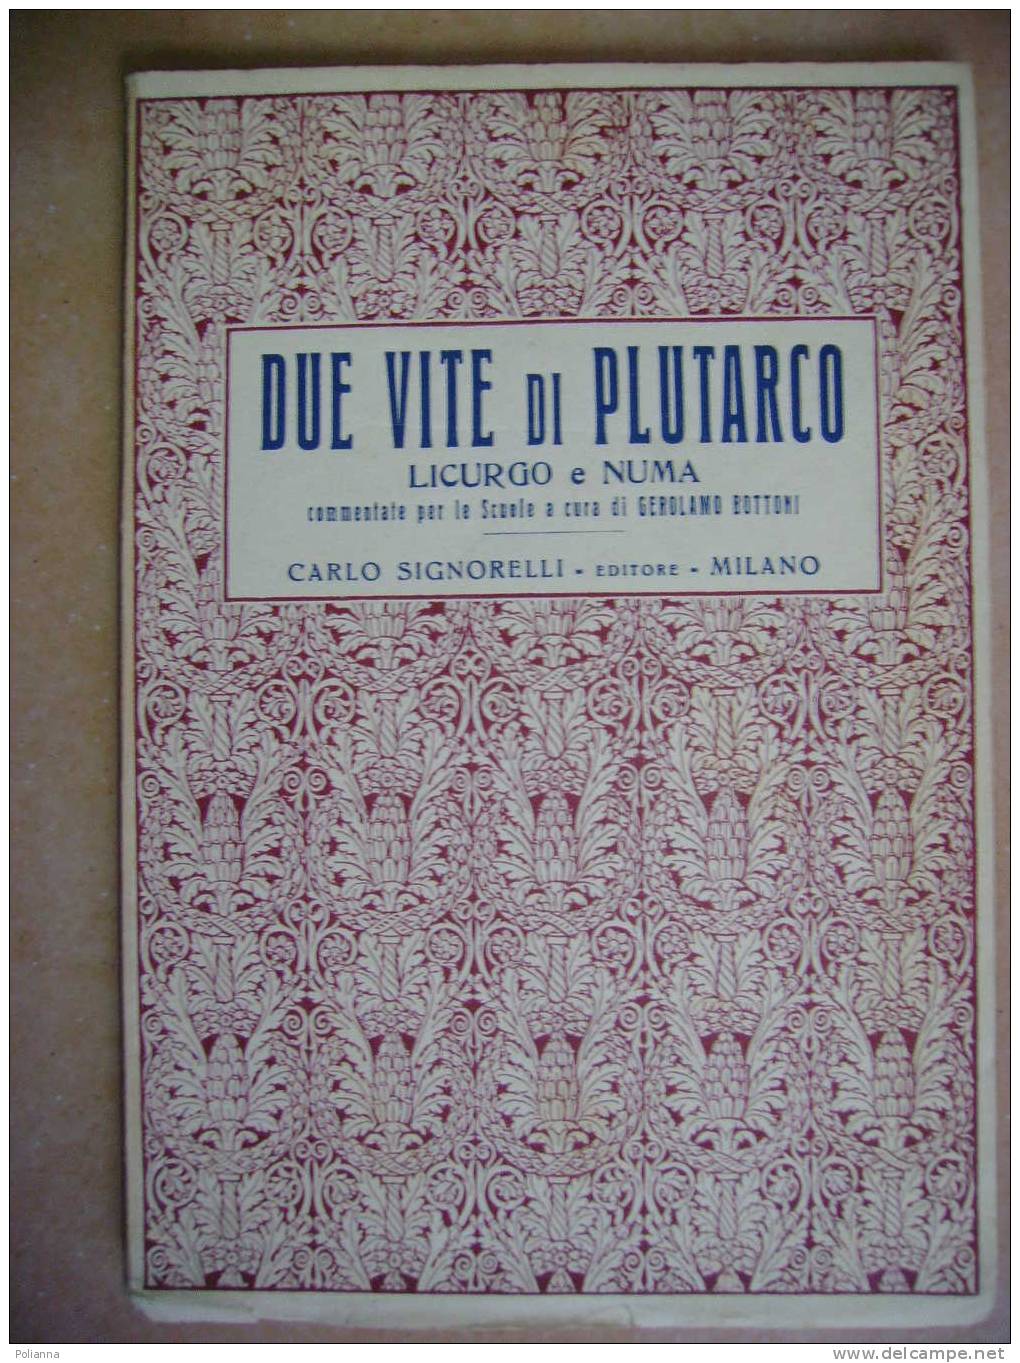 PAC/50 Licurgo E Numa DUE VITE DI PLUTARCO Signorelli 1924 - Classic